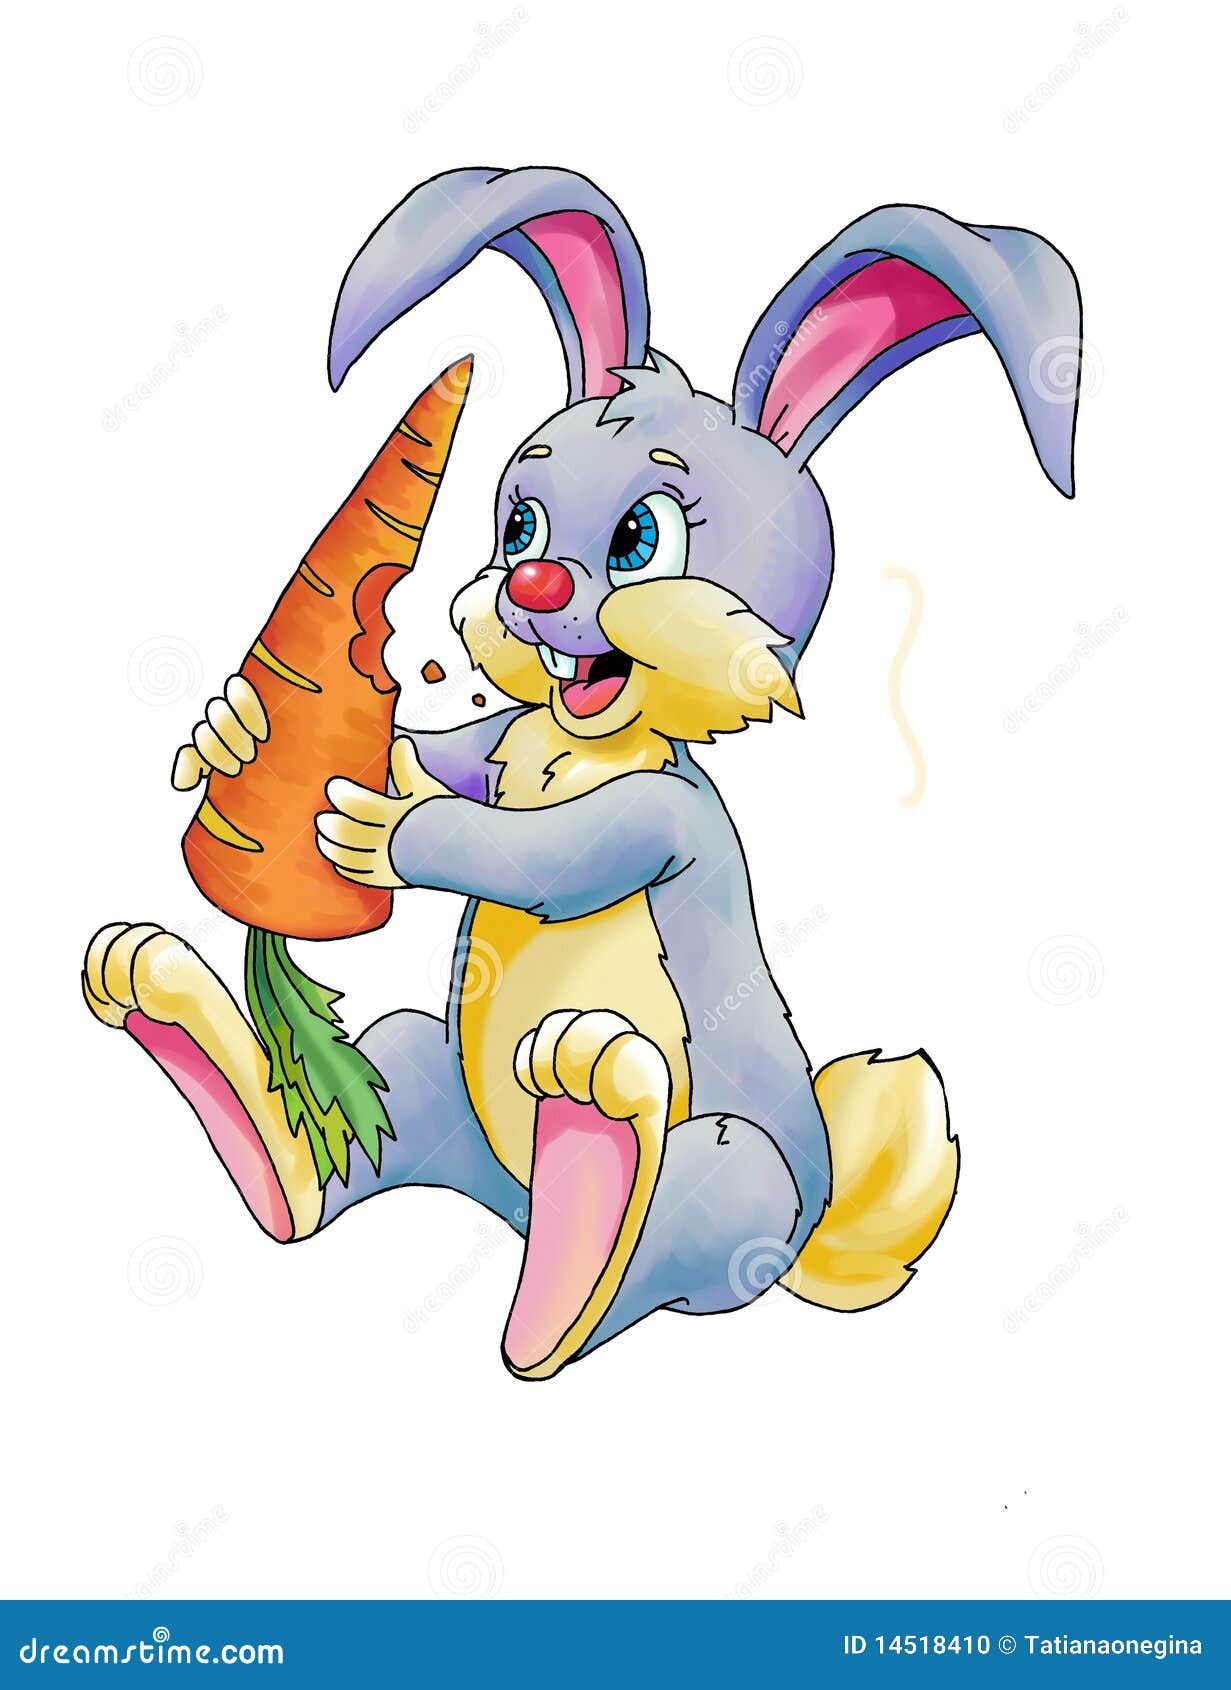 Bunny & Carrot